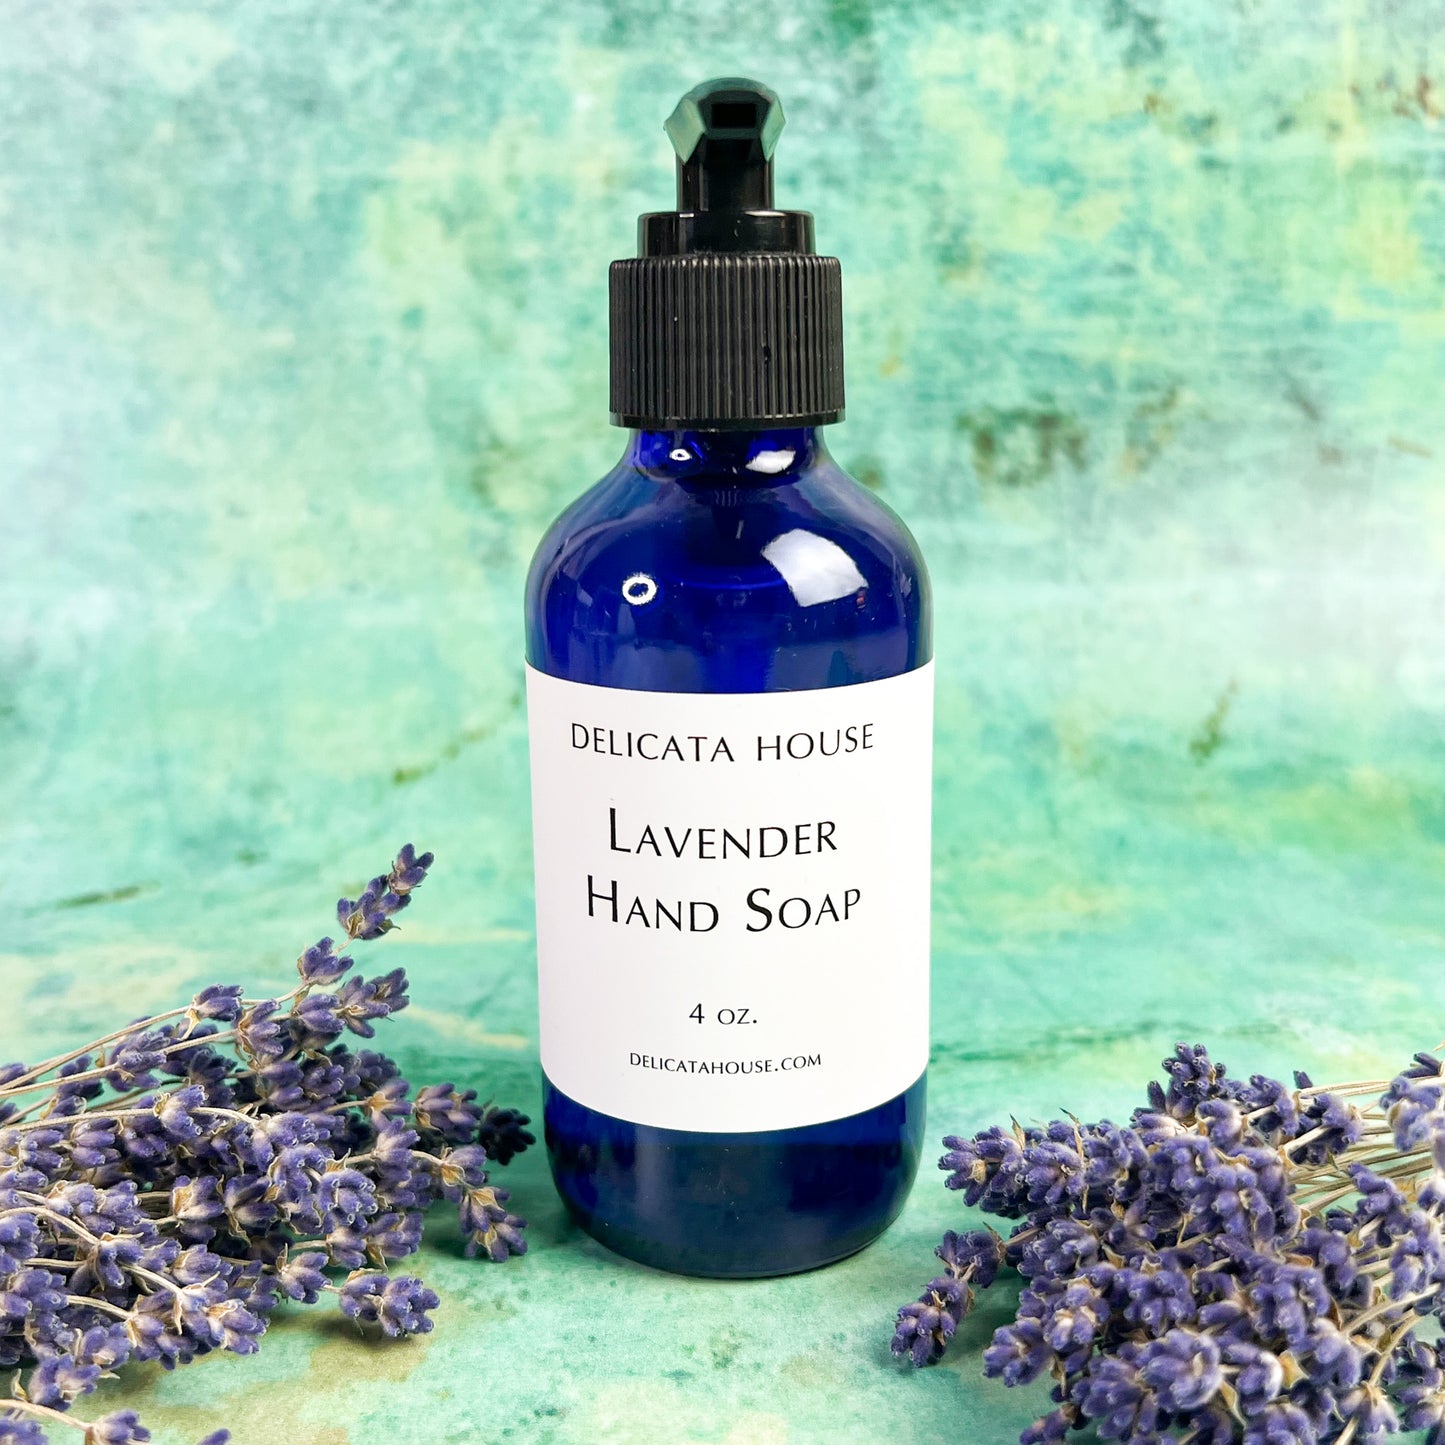 Hand Soap - Lavender Liquid Hand Soap - Kitchen Hand Soap - Family Hand Soap - Aromatherapy Hand Soap - Wellness Gift - Lavender Lover Gift